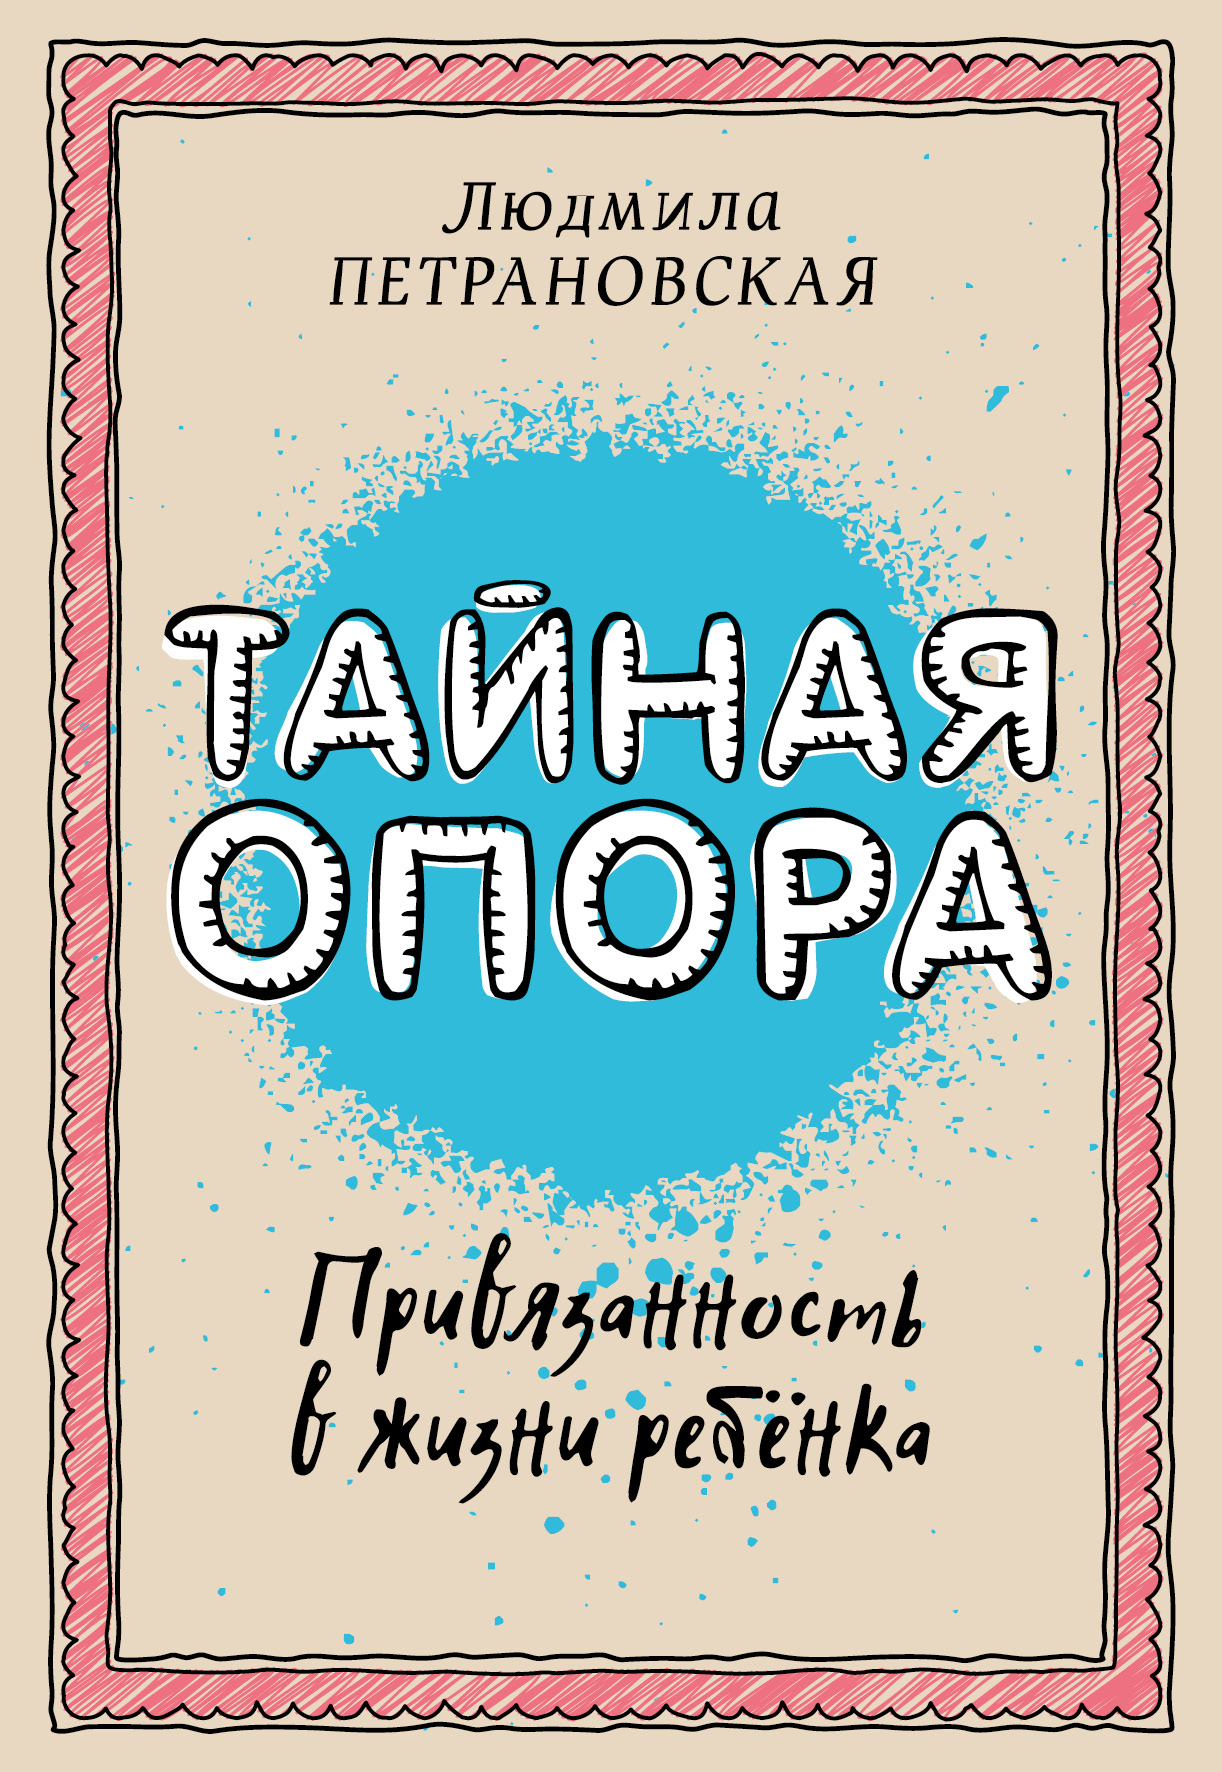 Book “Тайная опора” by Людмила Петрановская